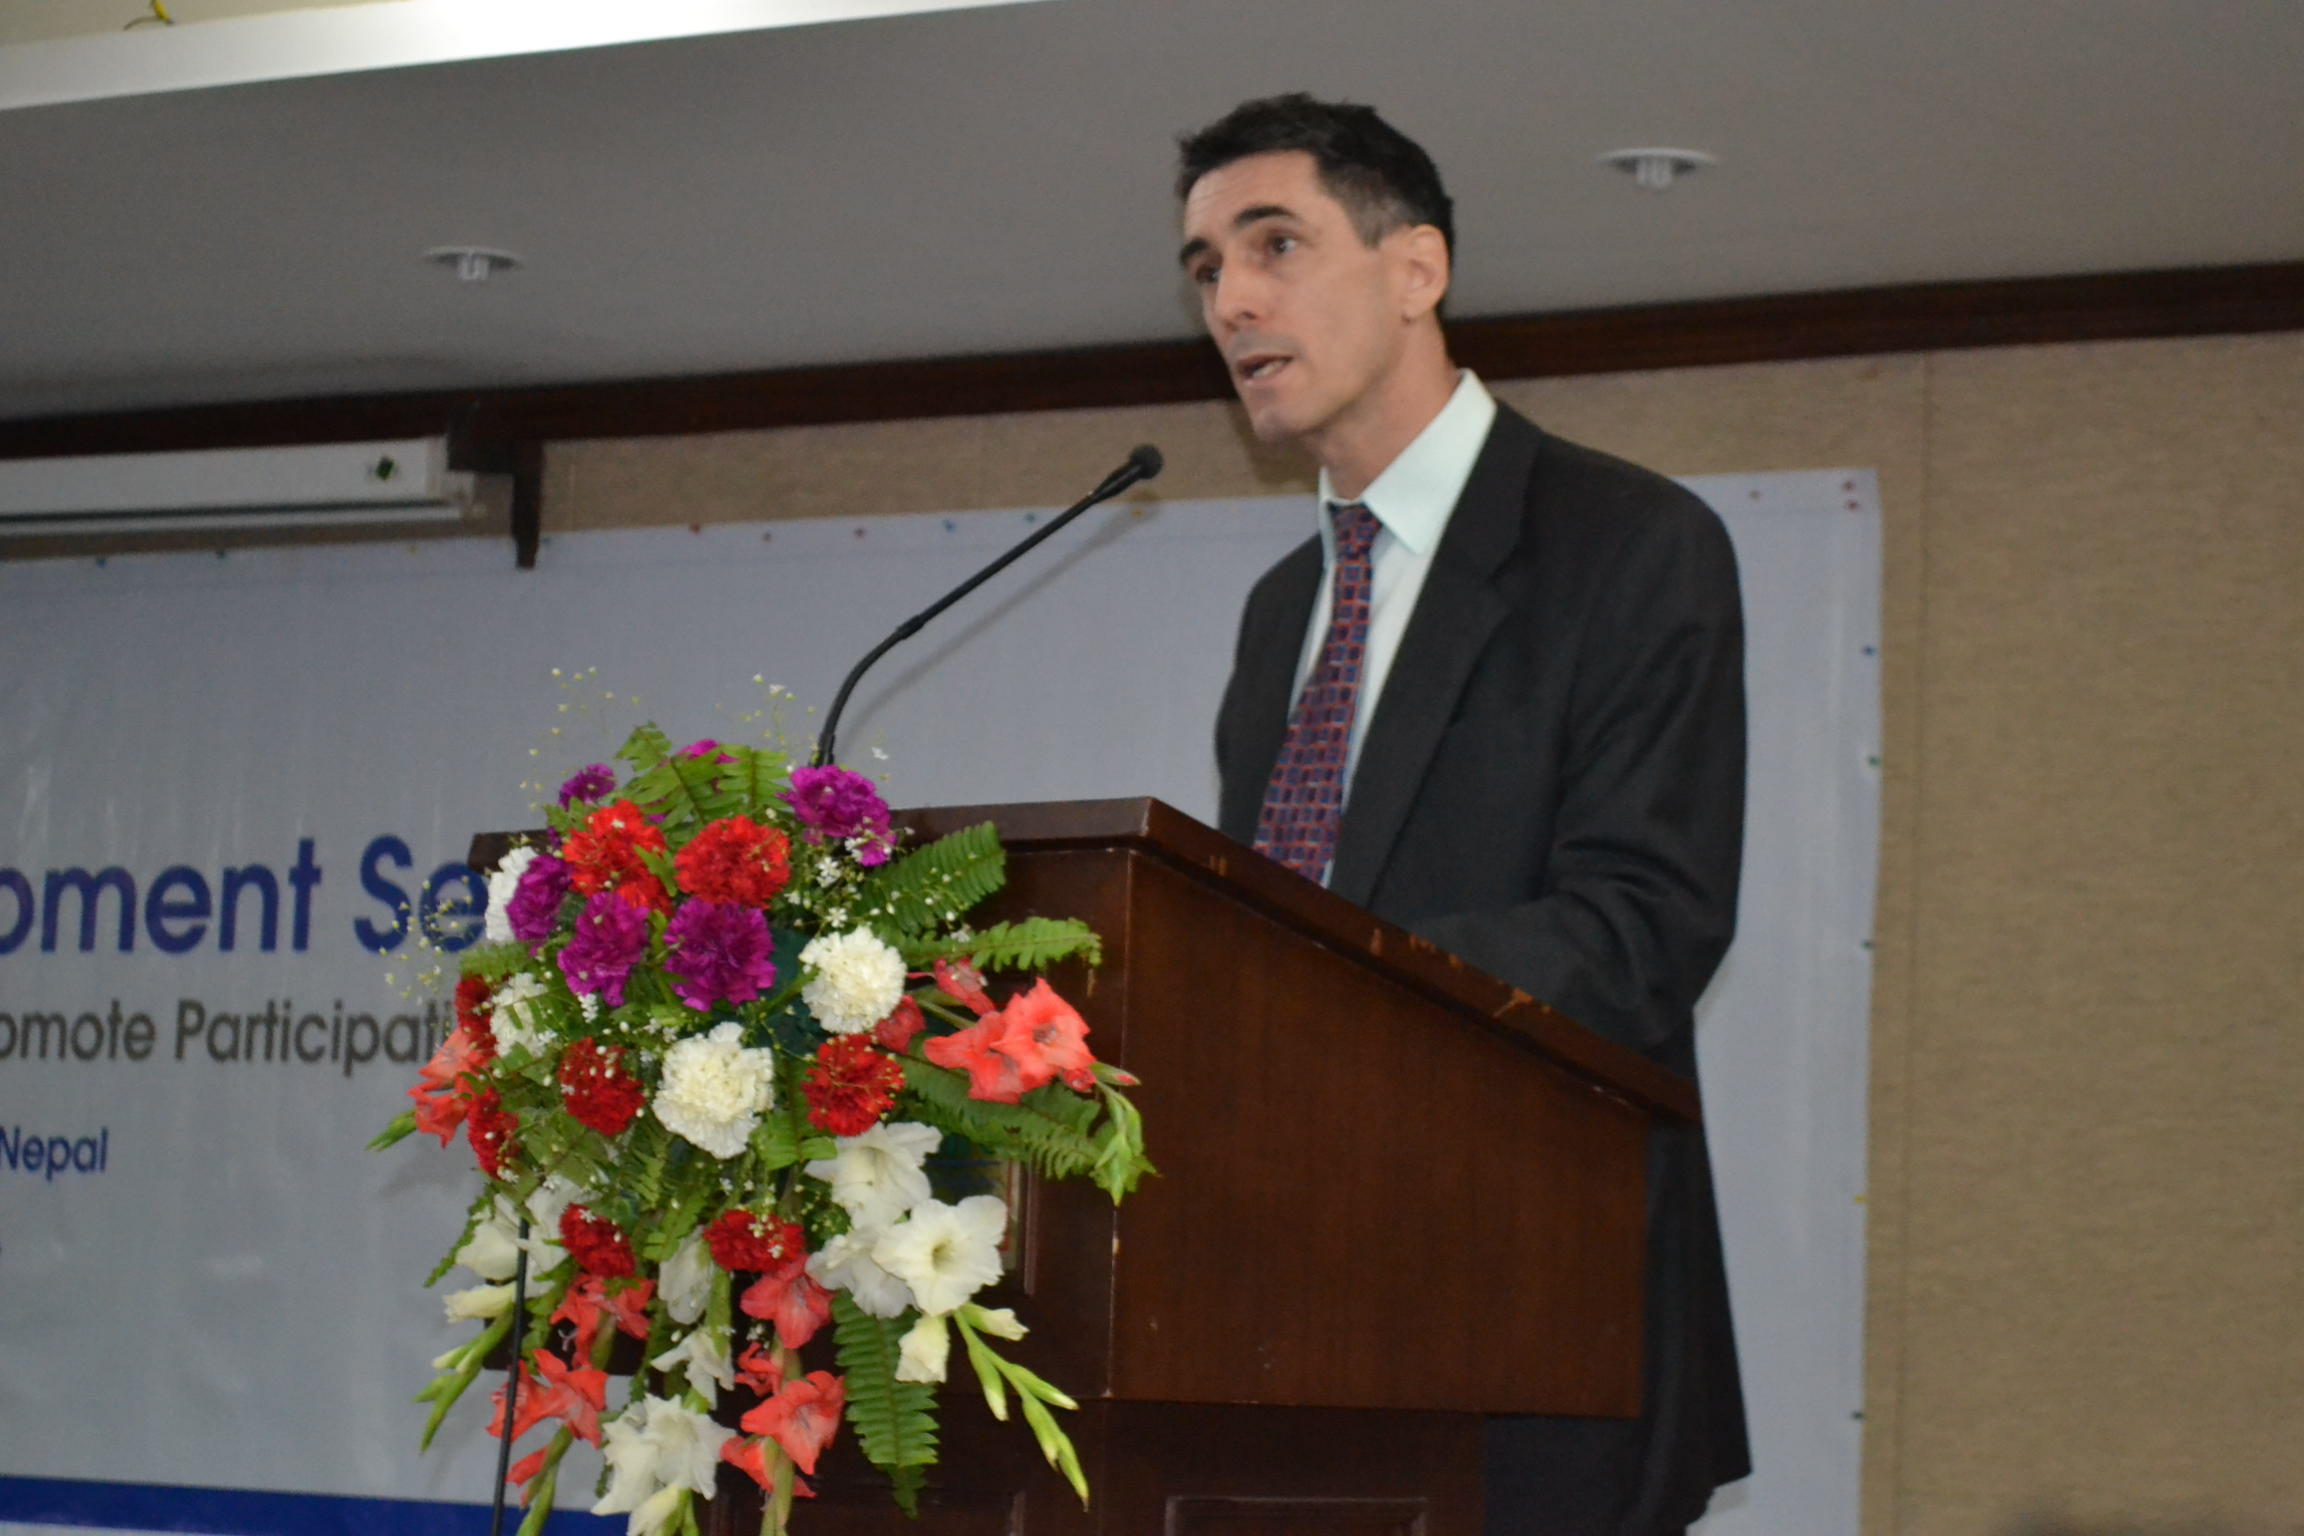 Marco Roncarati speaks at APPDSA event 2015